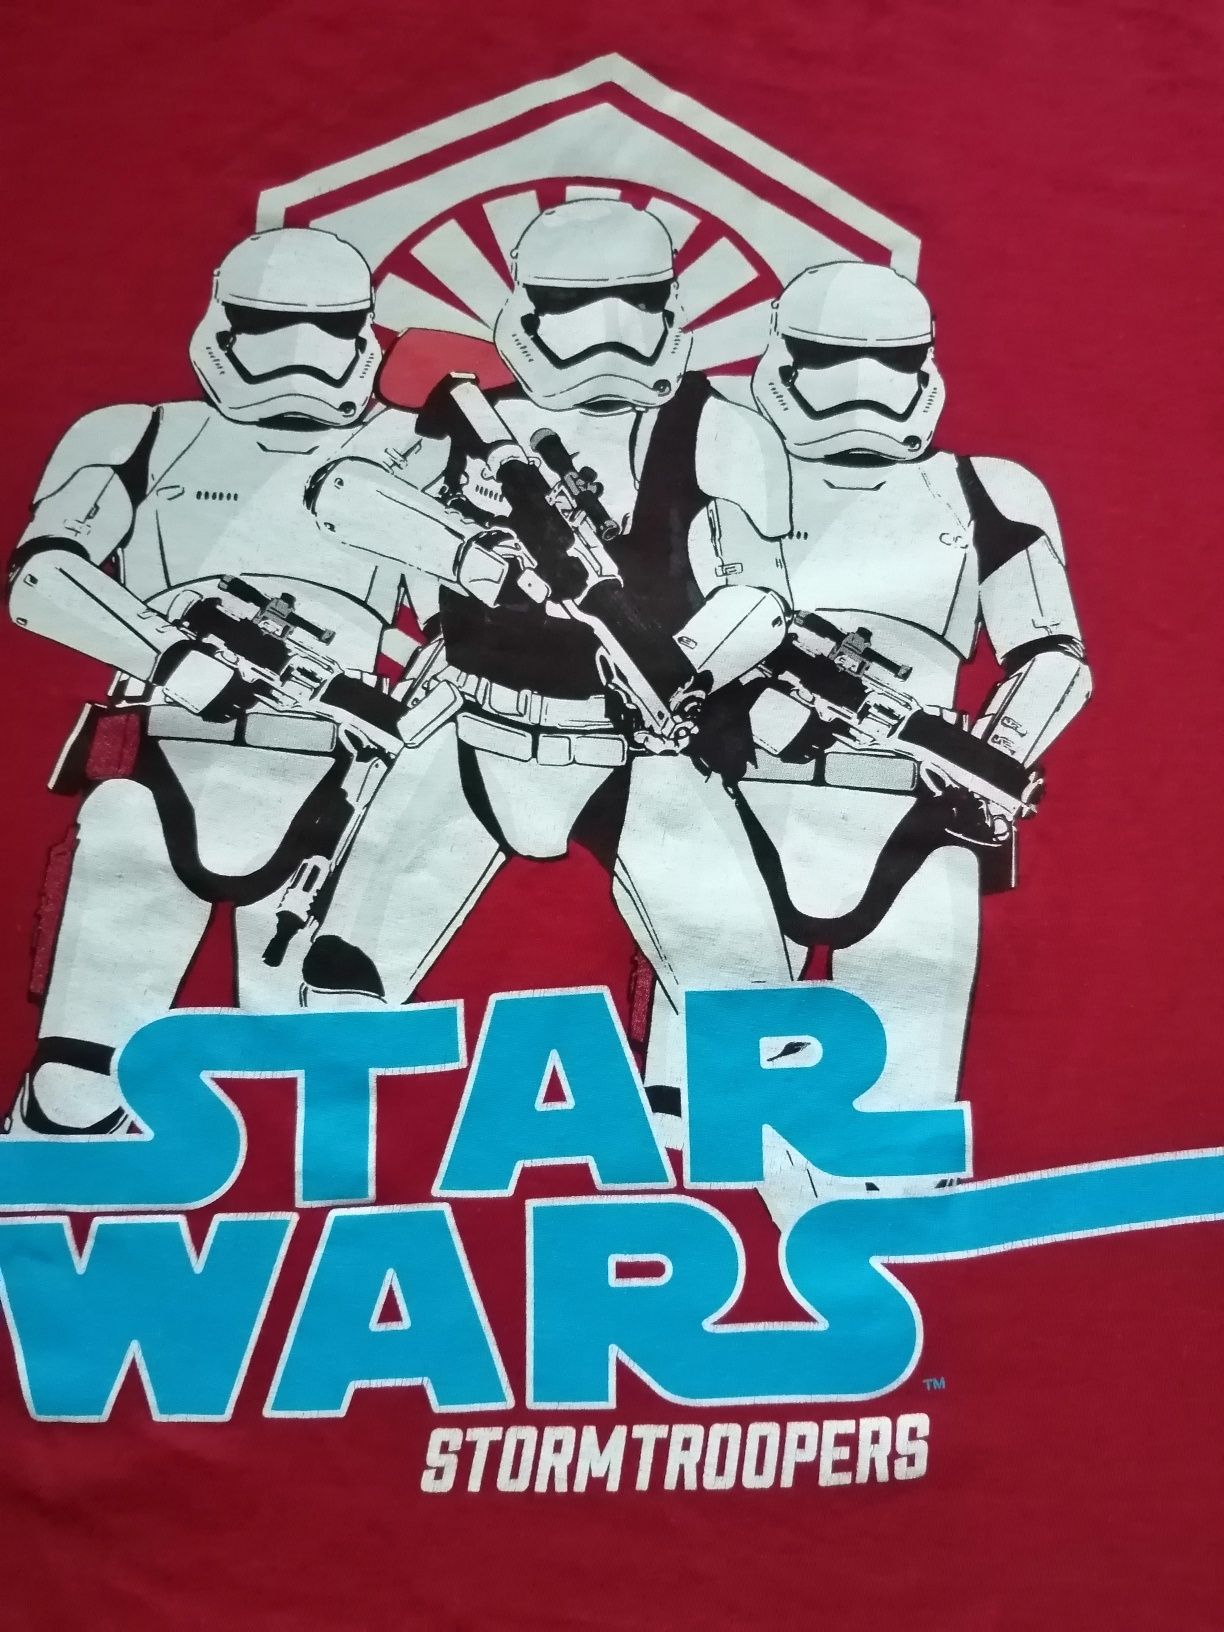 Koszulka Star Wars